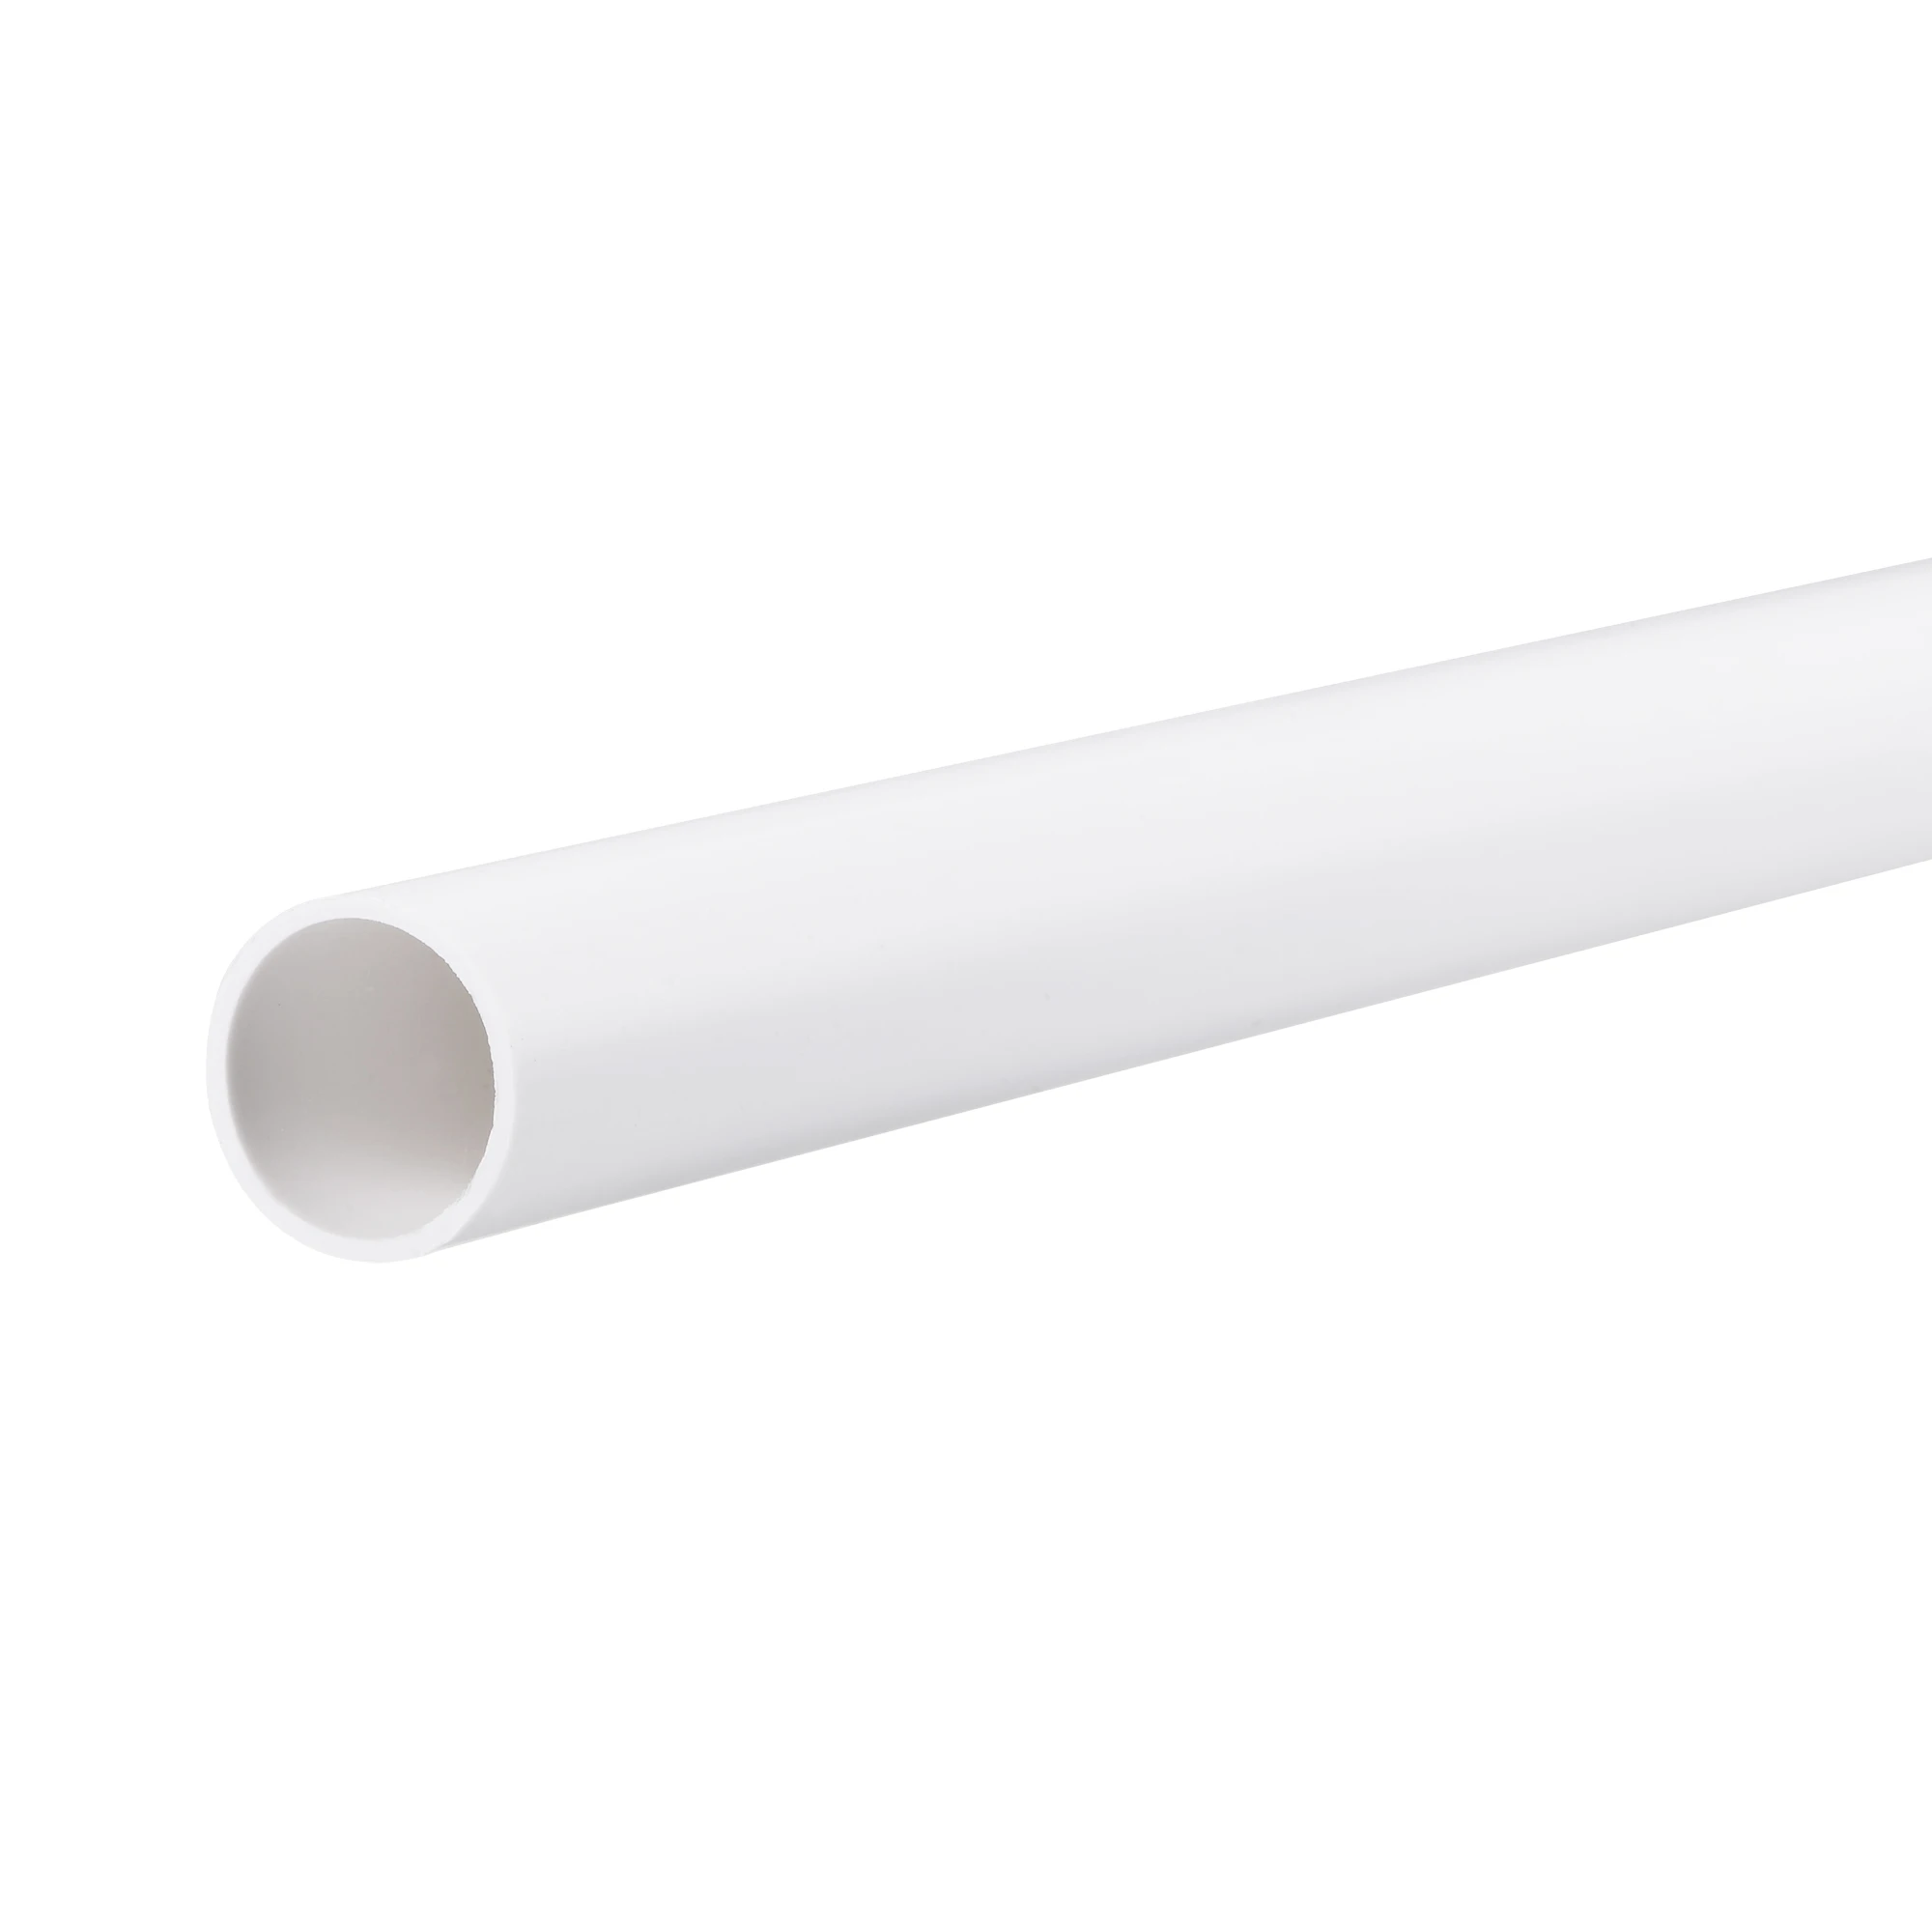 Uxcell PVC Pipe Round Rigid Plastic Tube 1/2